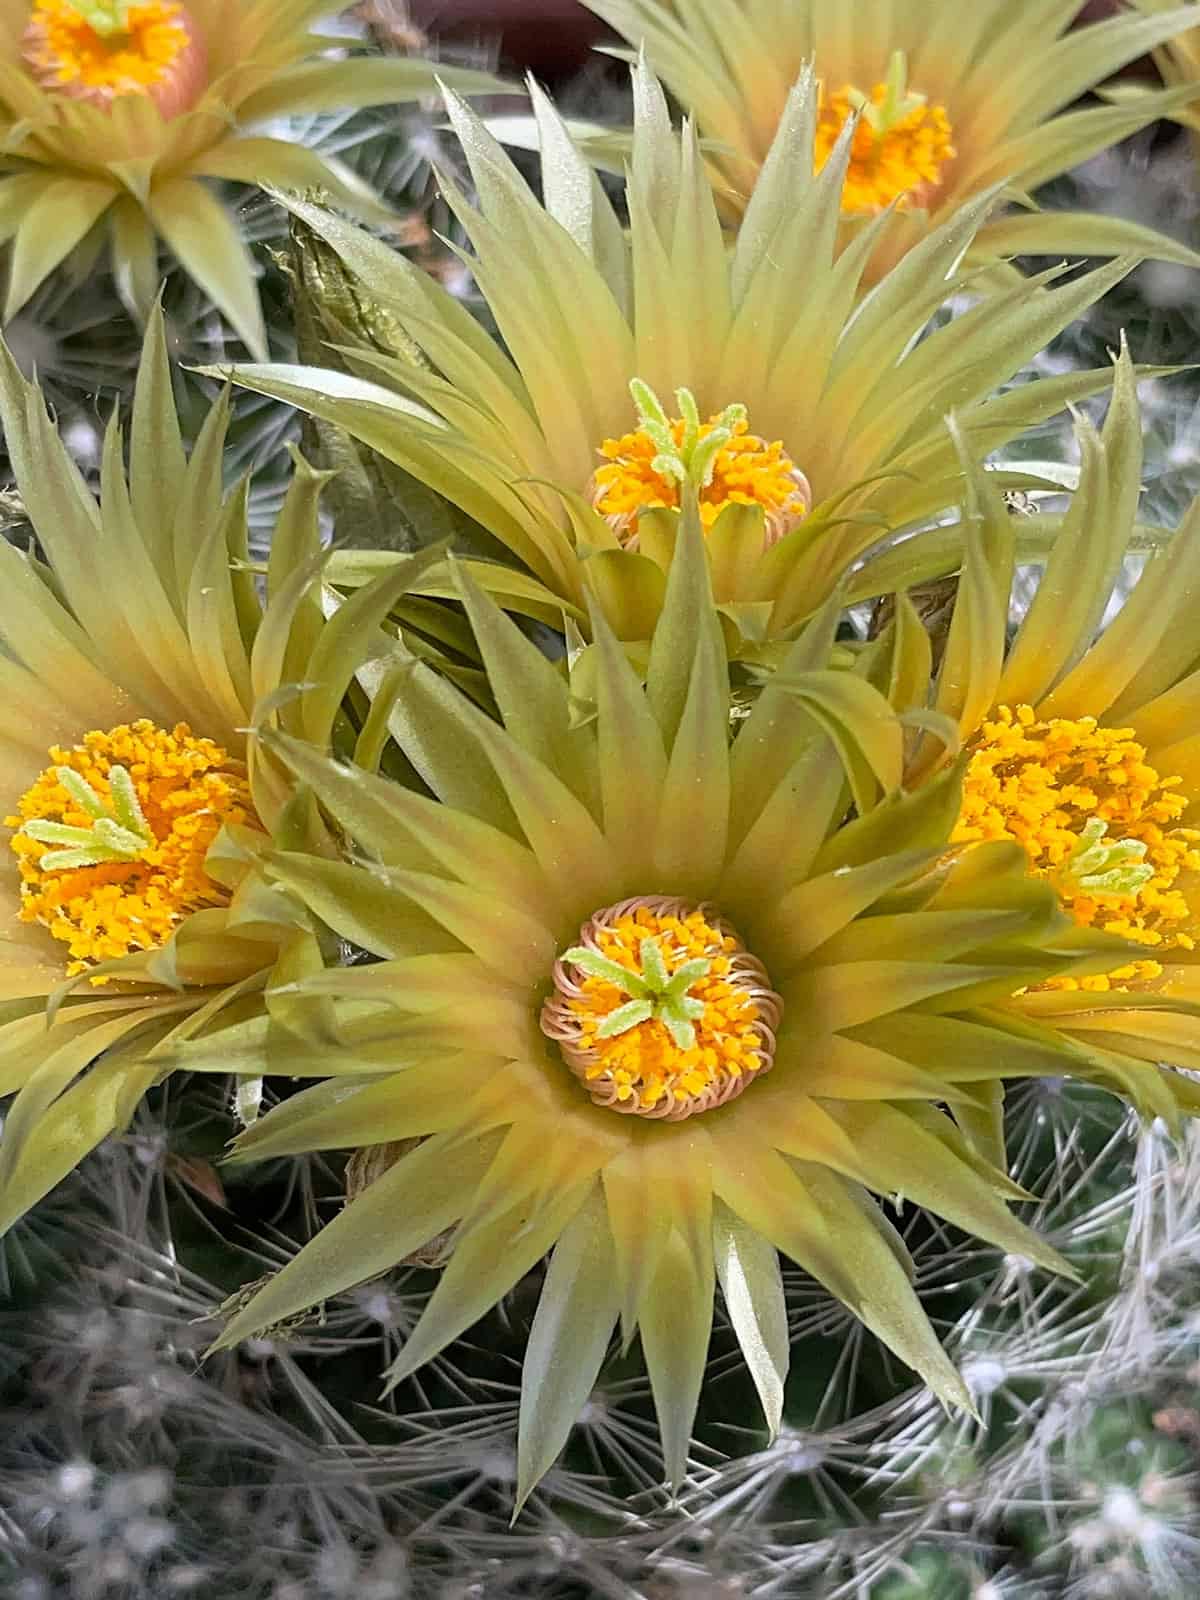 Stunning spikey flowers of a Missouri Foxtail Cactus